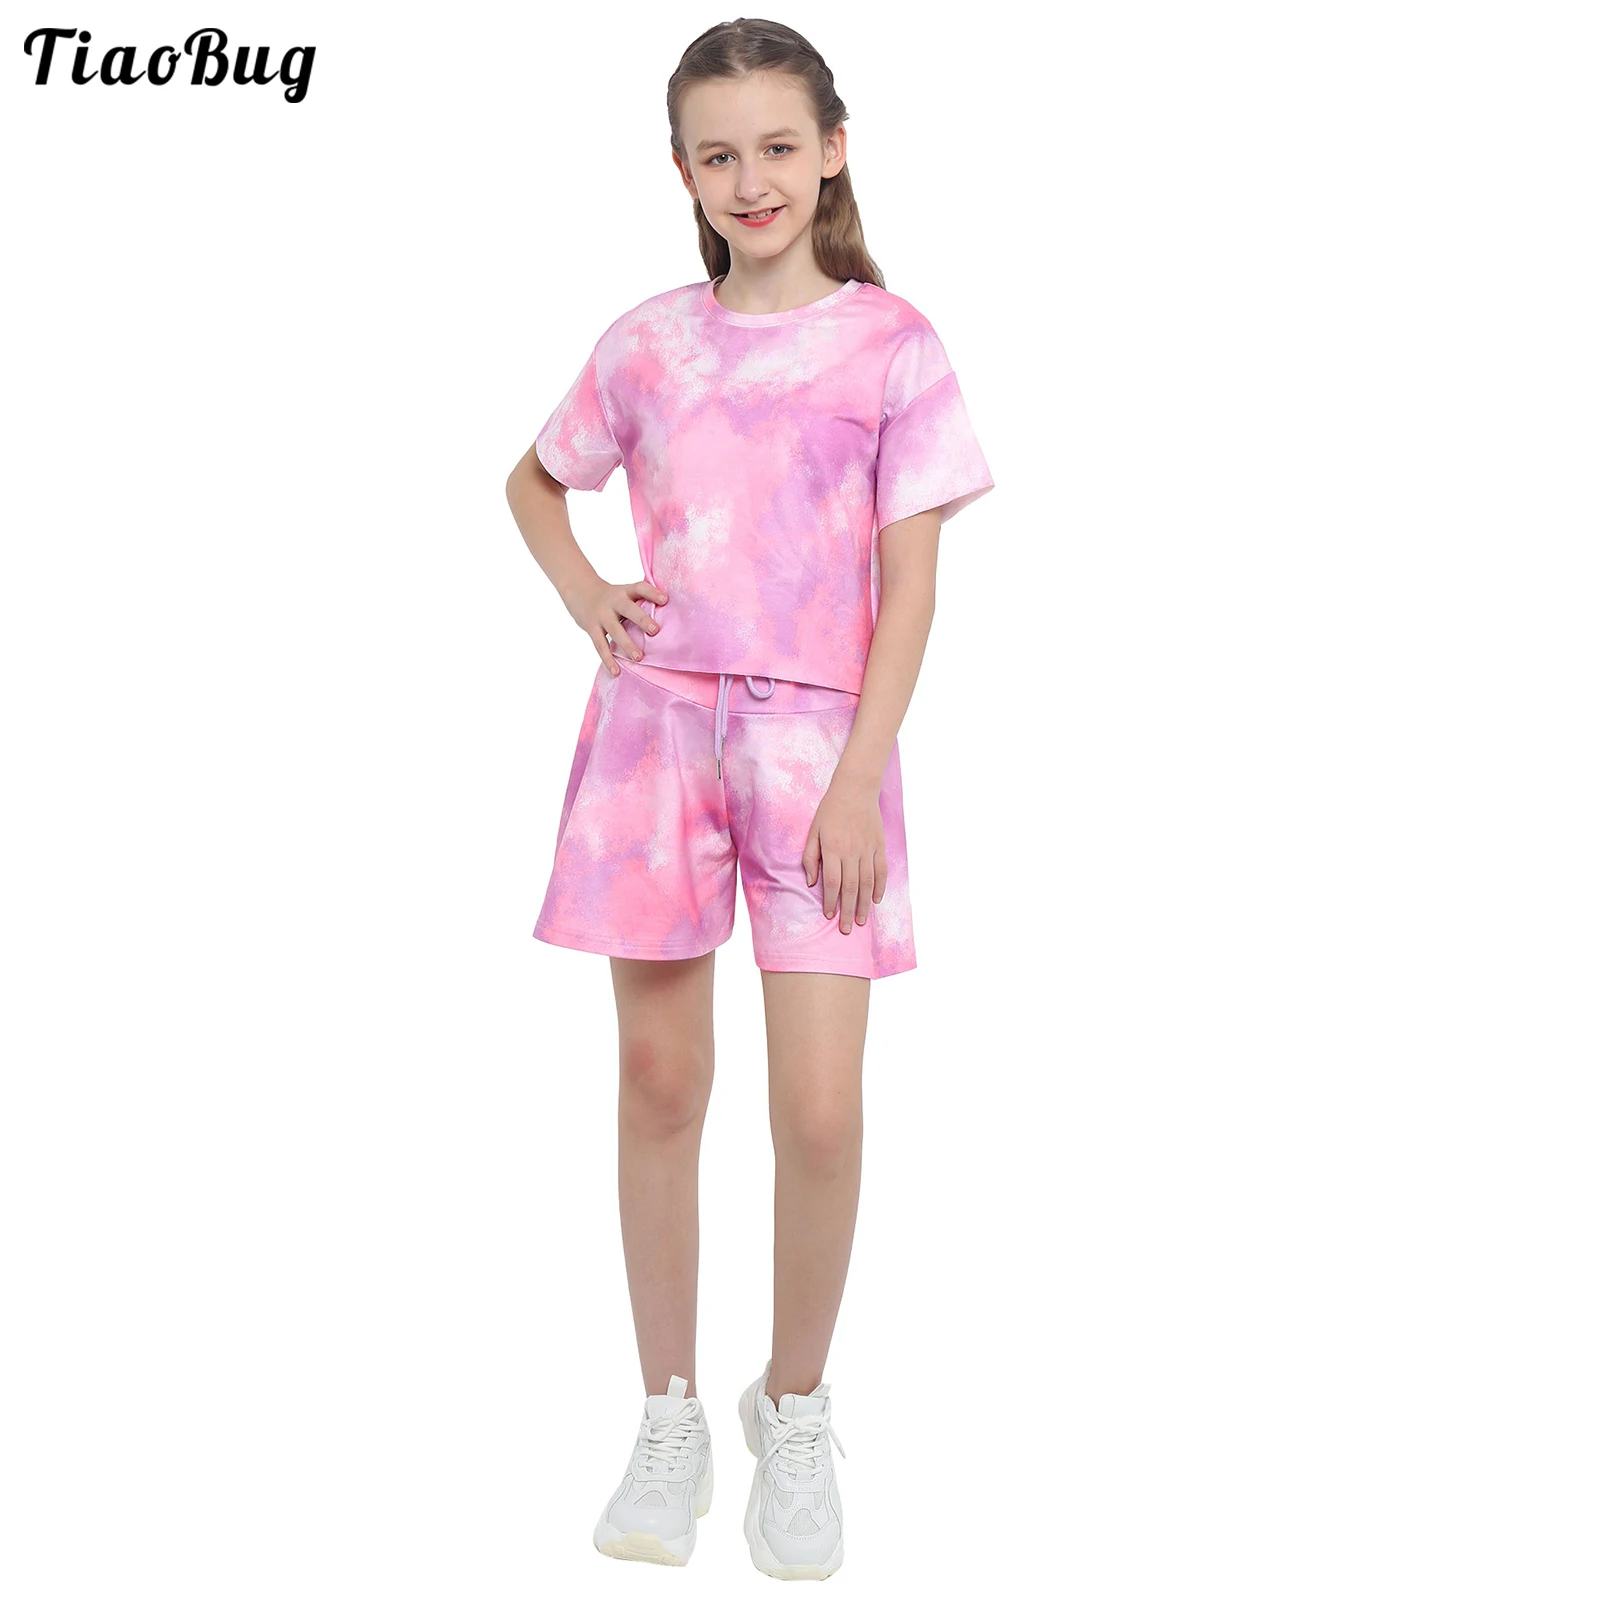 

TiaoBug Summer 3 To 10 Years 2Pcs Kids Girls Tie Dye Print Sport Running Suit Round Neck Short Sleeve T-Shirt Top And Shorts Set